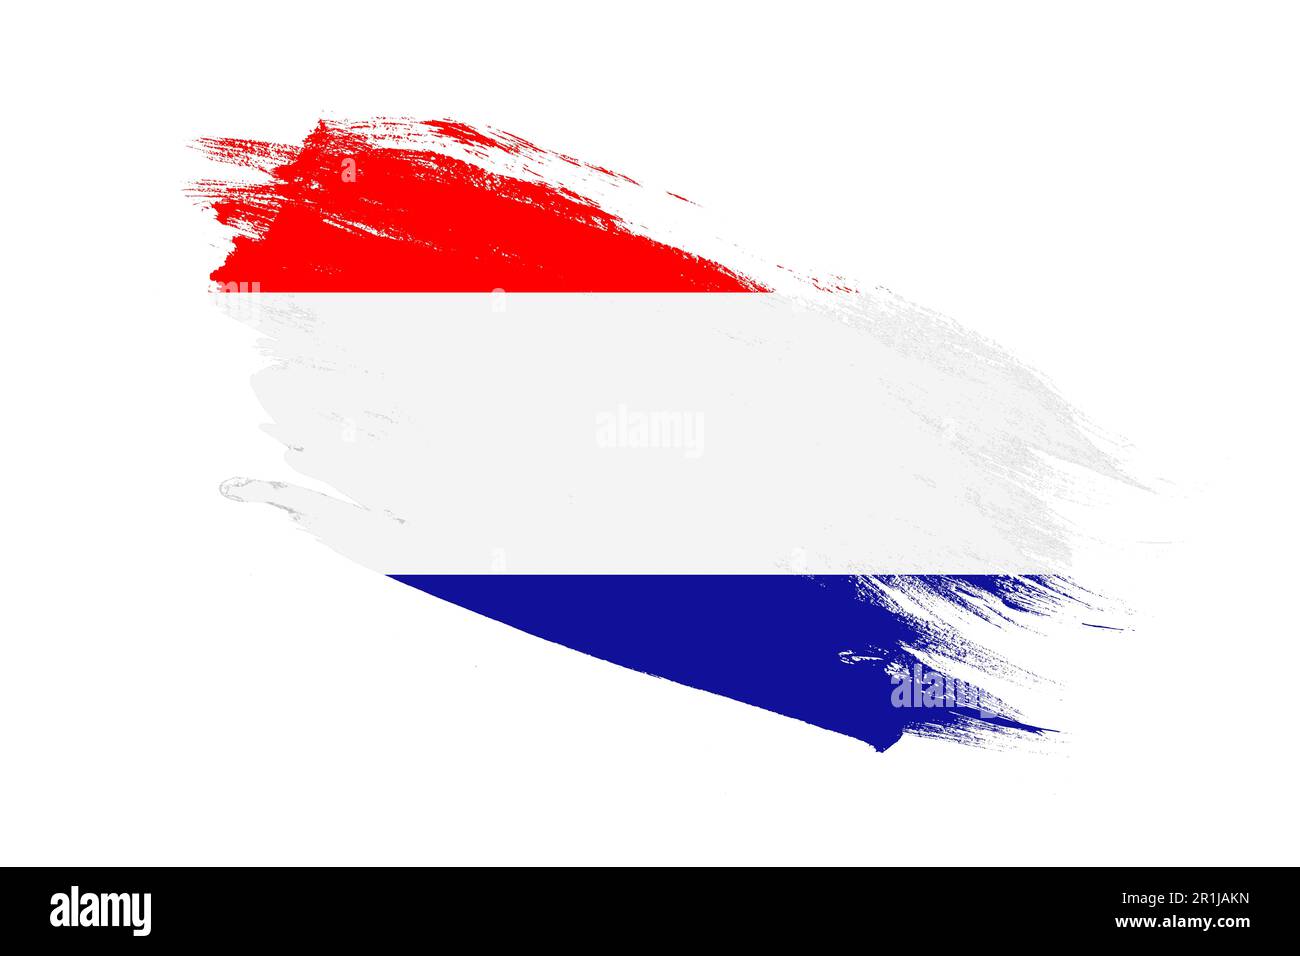 Croatia flag with stroke brush painted effects on isolated white background Stock Photo